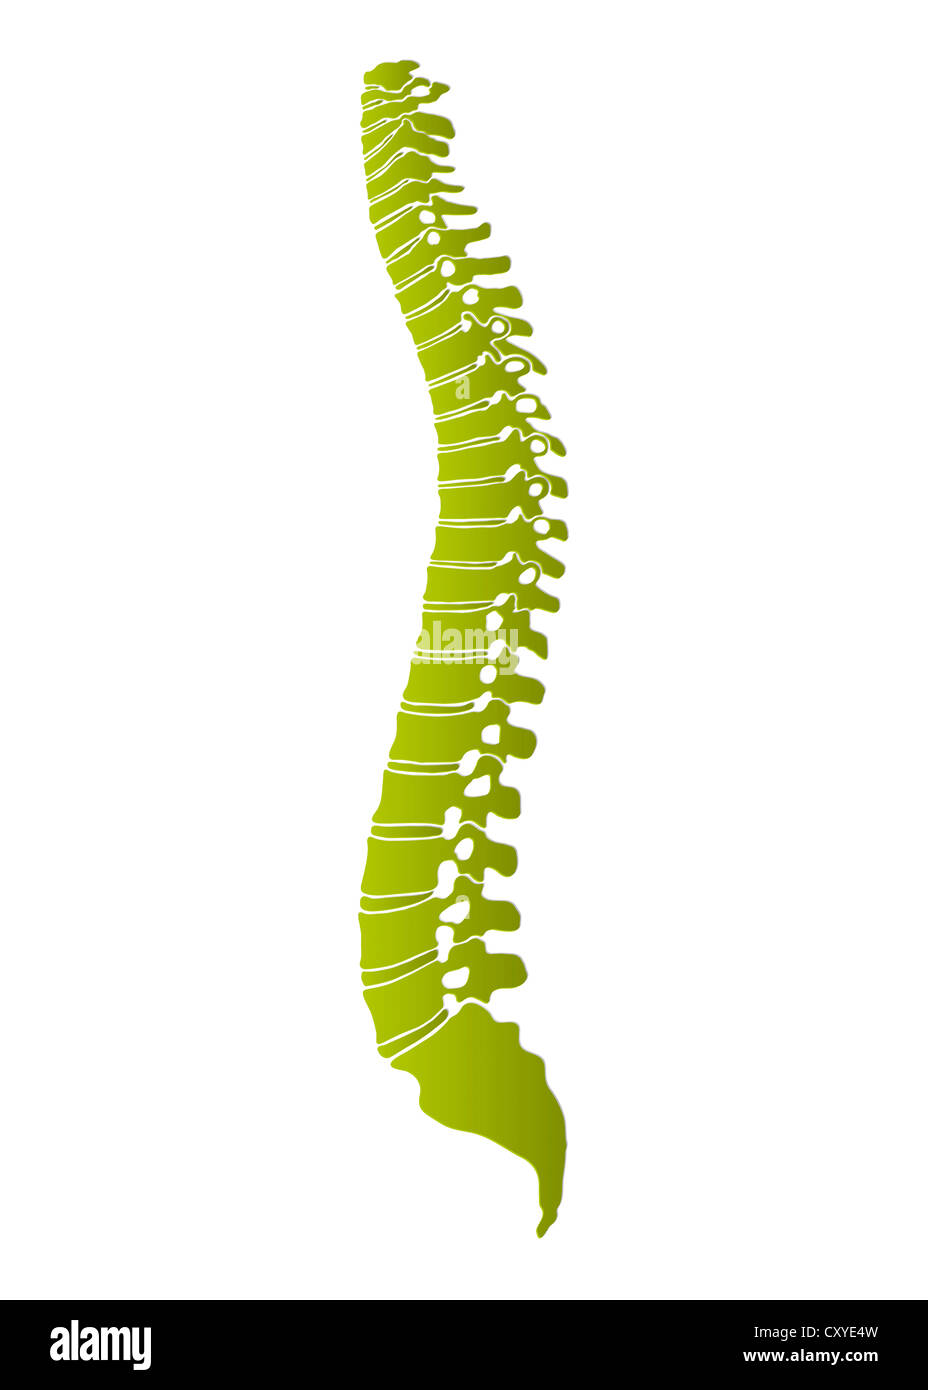 Human spine, schematic representation Stock Photo